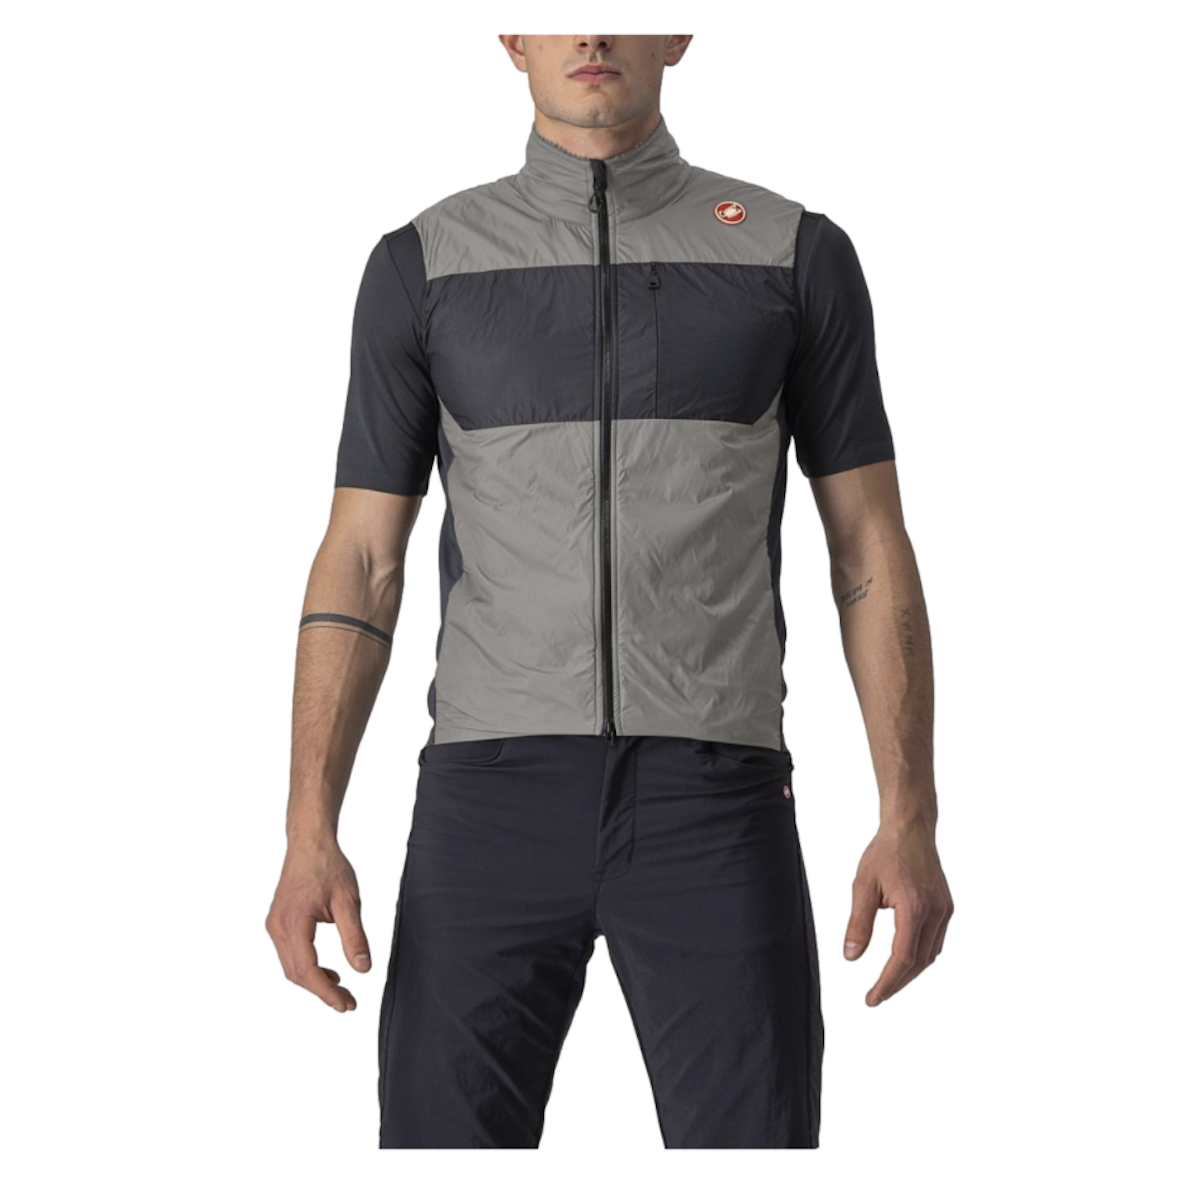 CASTELLI UNLIMITED PUFFY cycling vest - grey